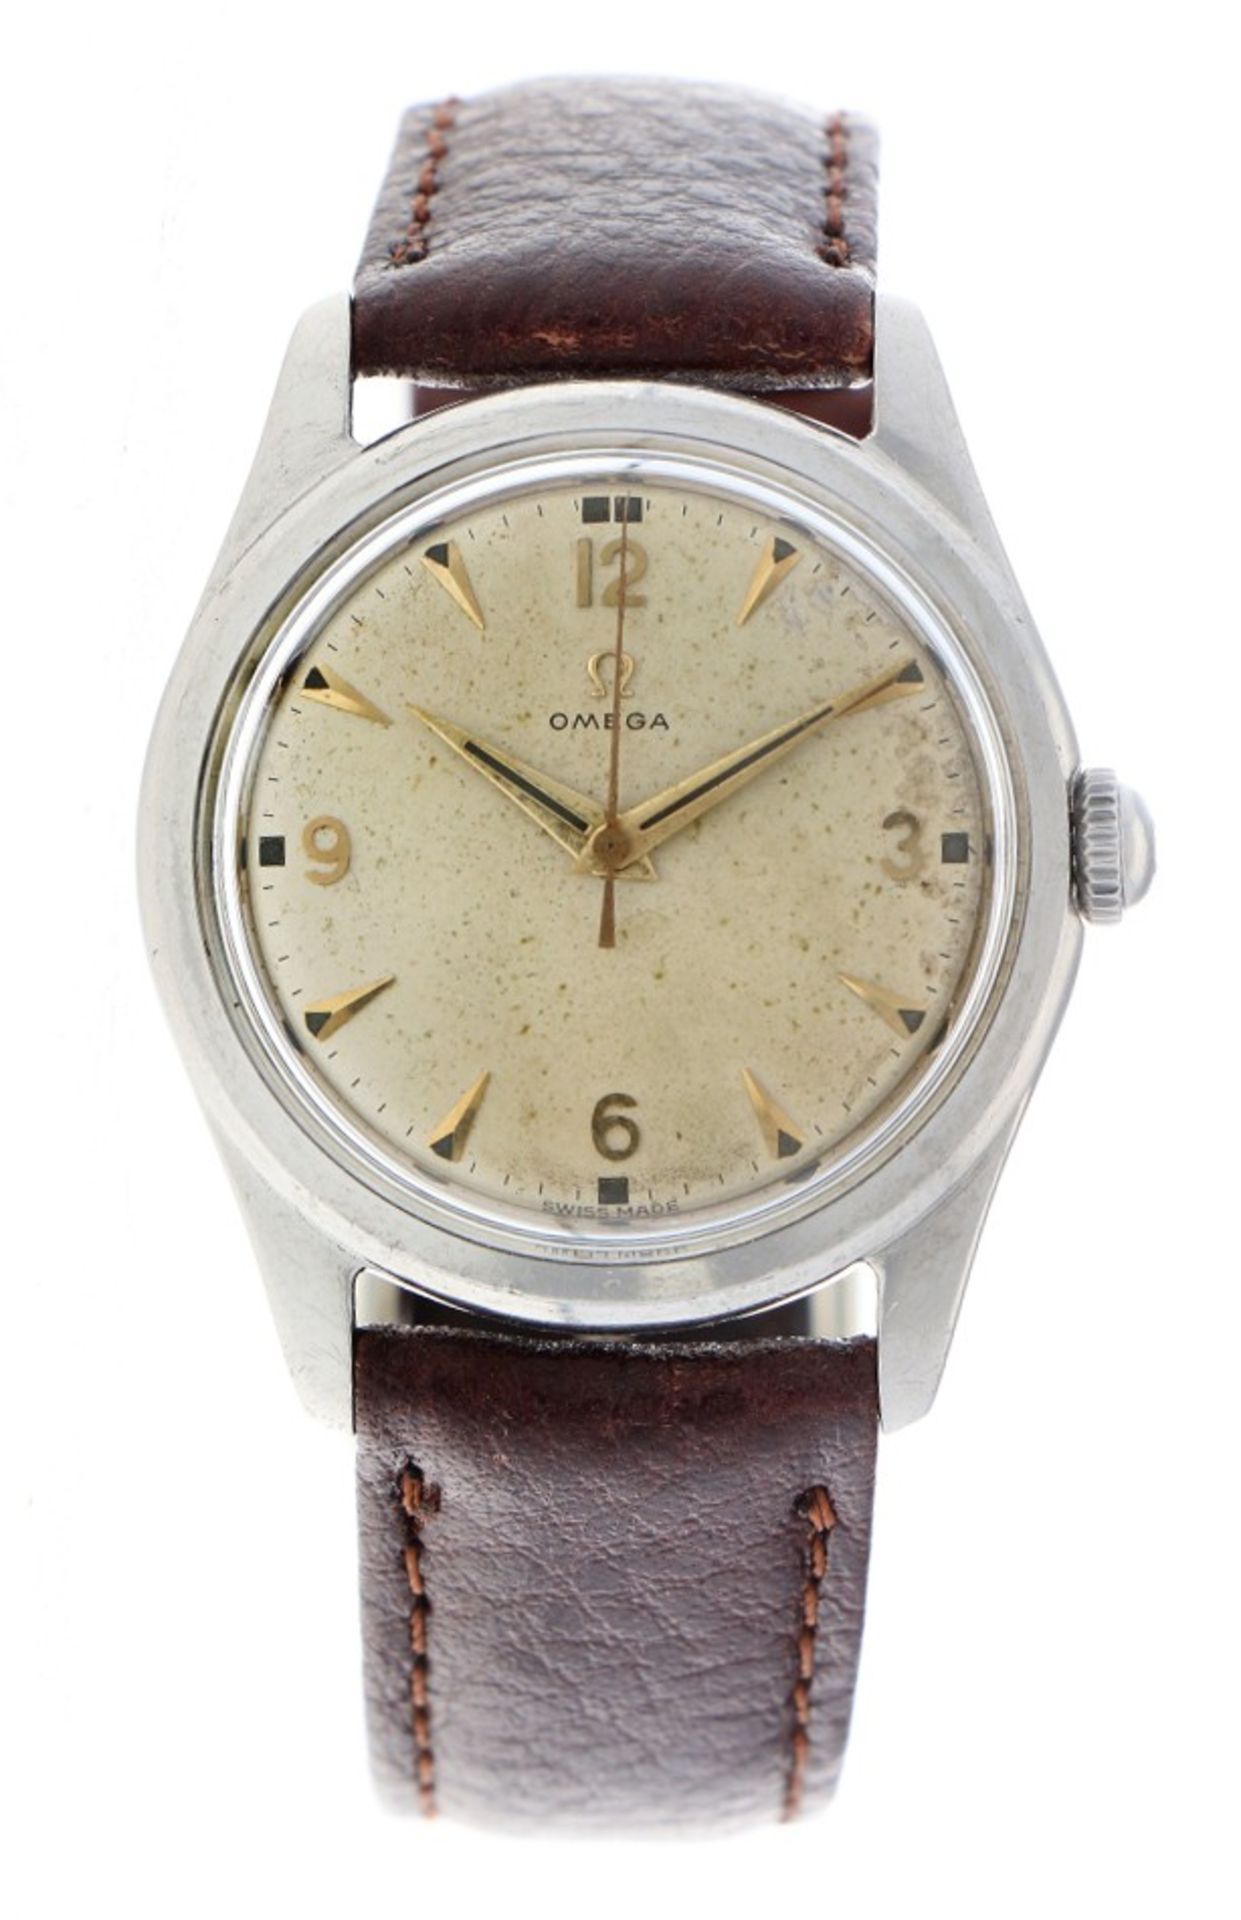 Omega 2690 SC - Men's watch - ca. 1952